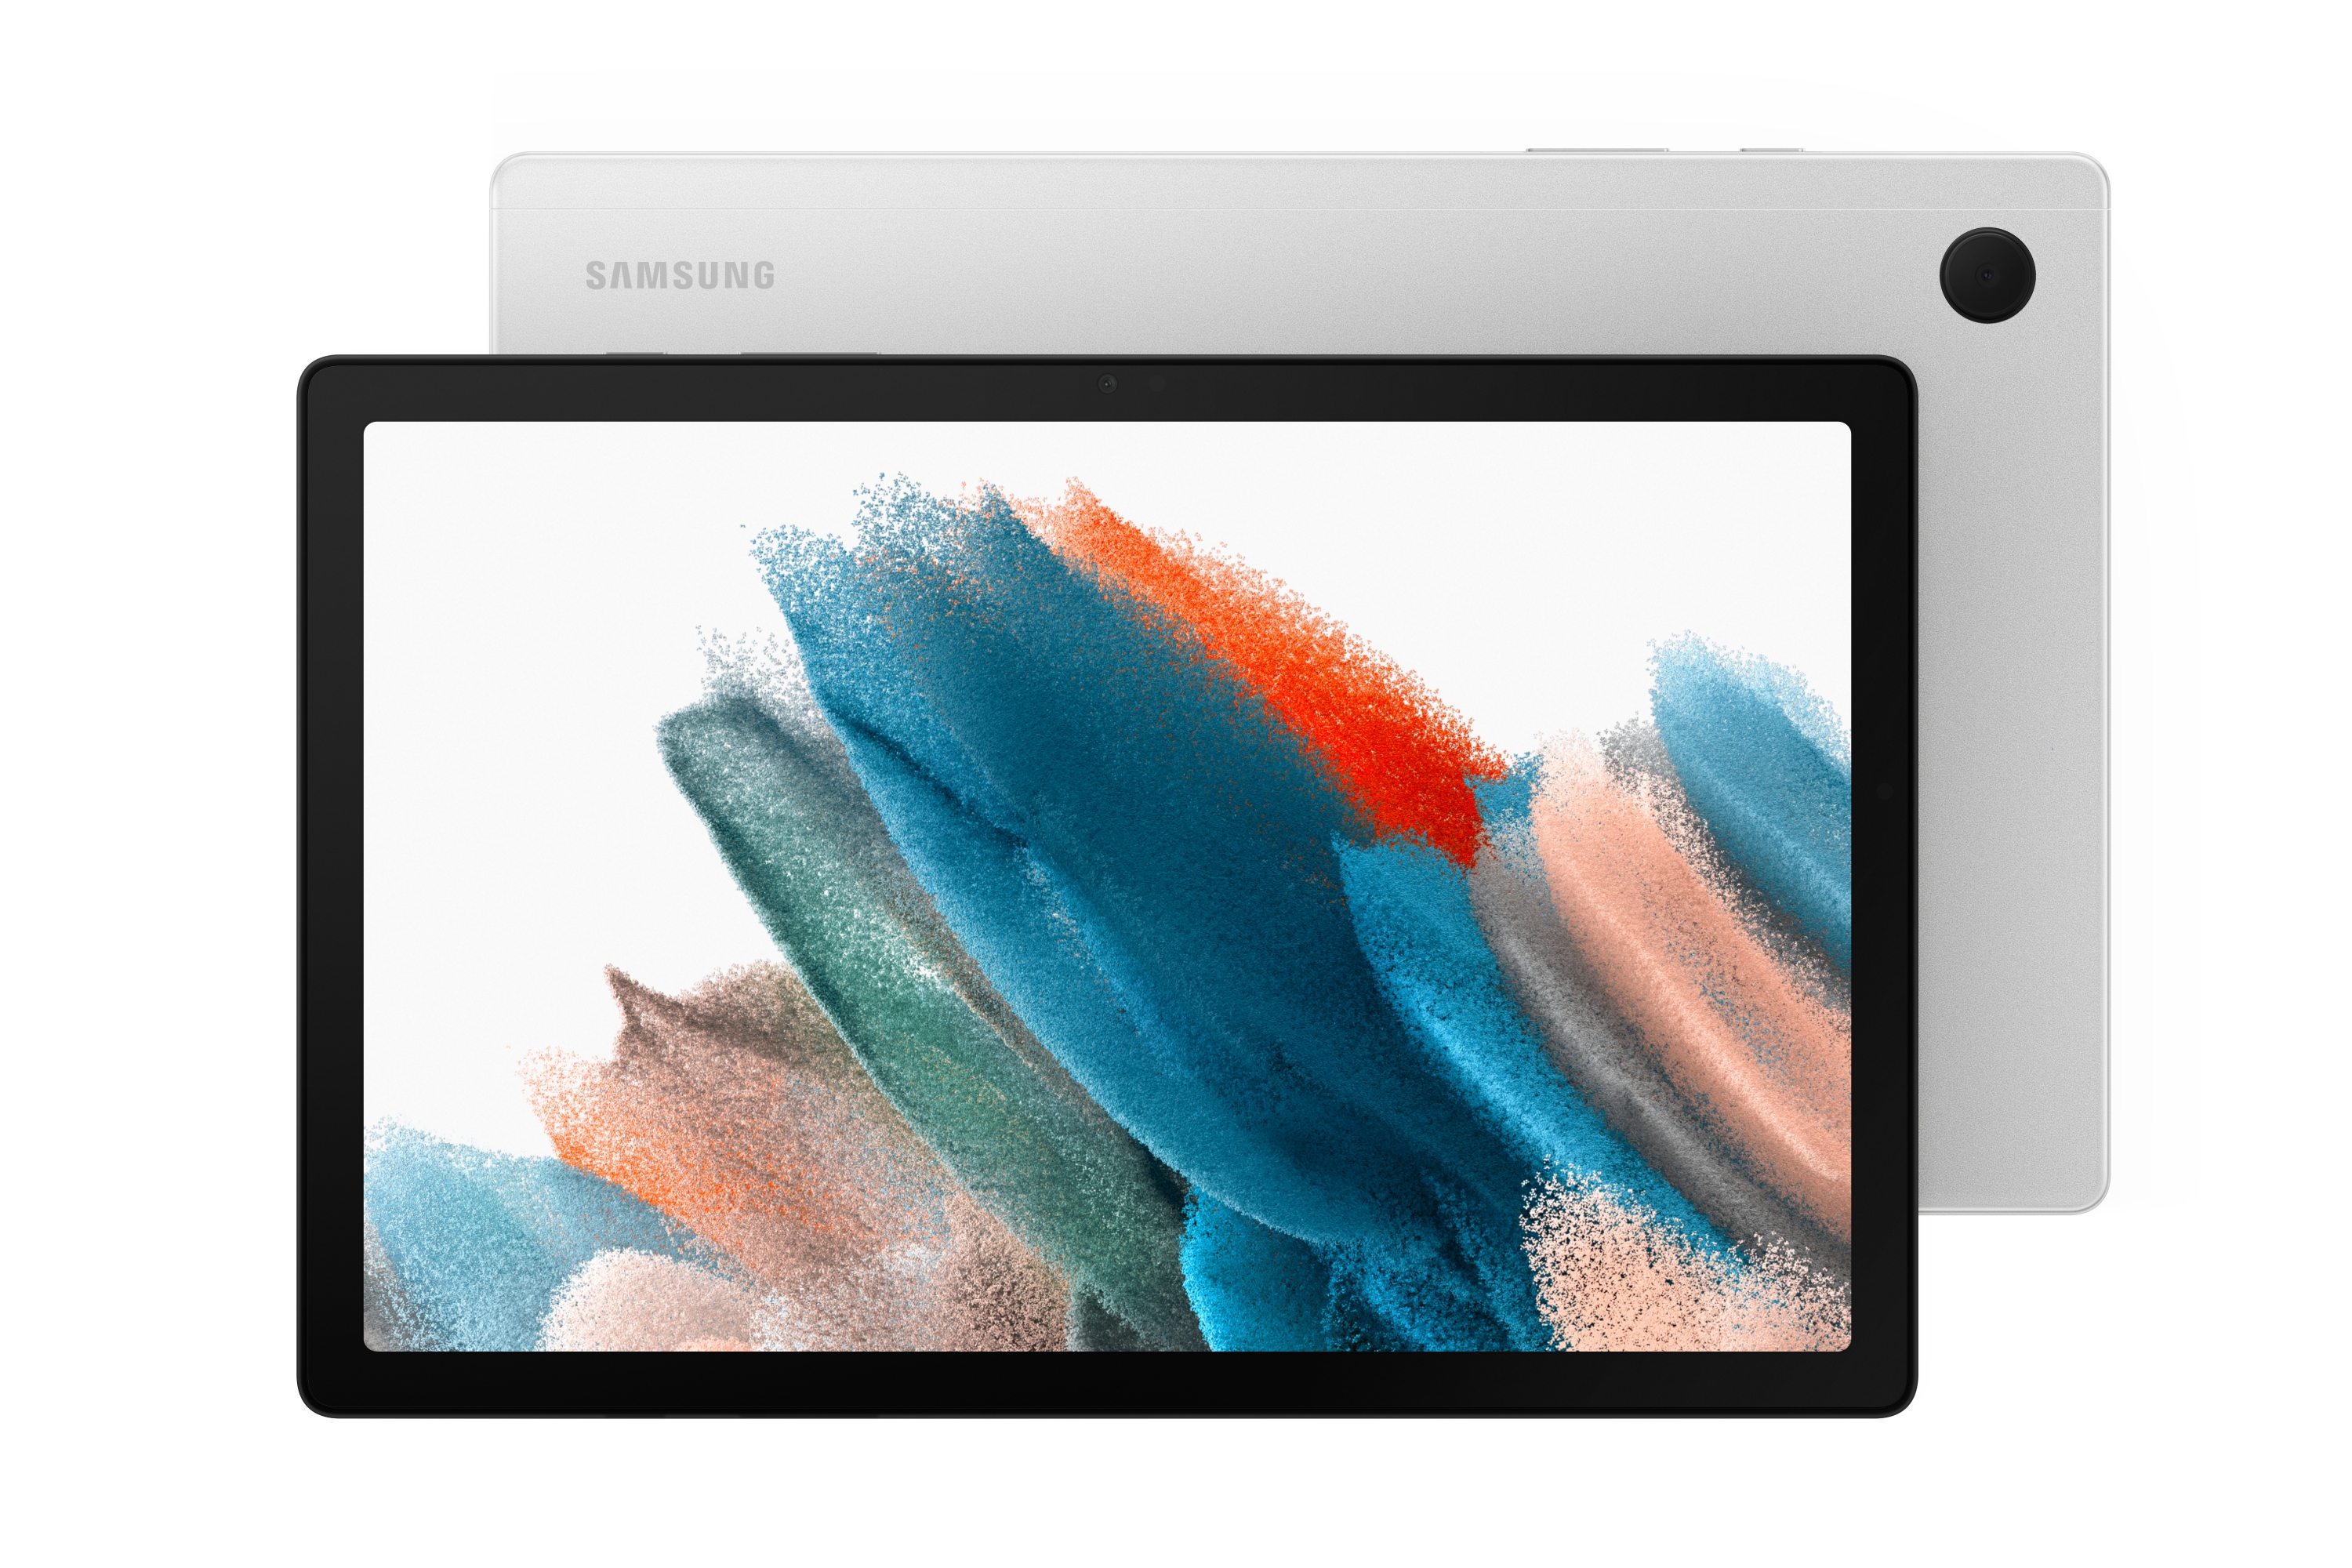 Thumbnail image of Galaxy Tab A8, 64GB, Silver (Wi-Fi)